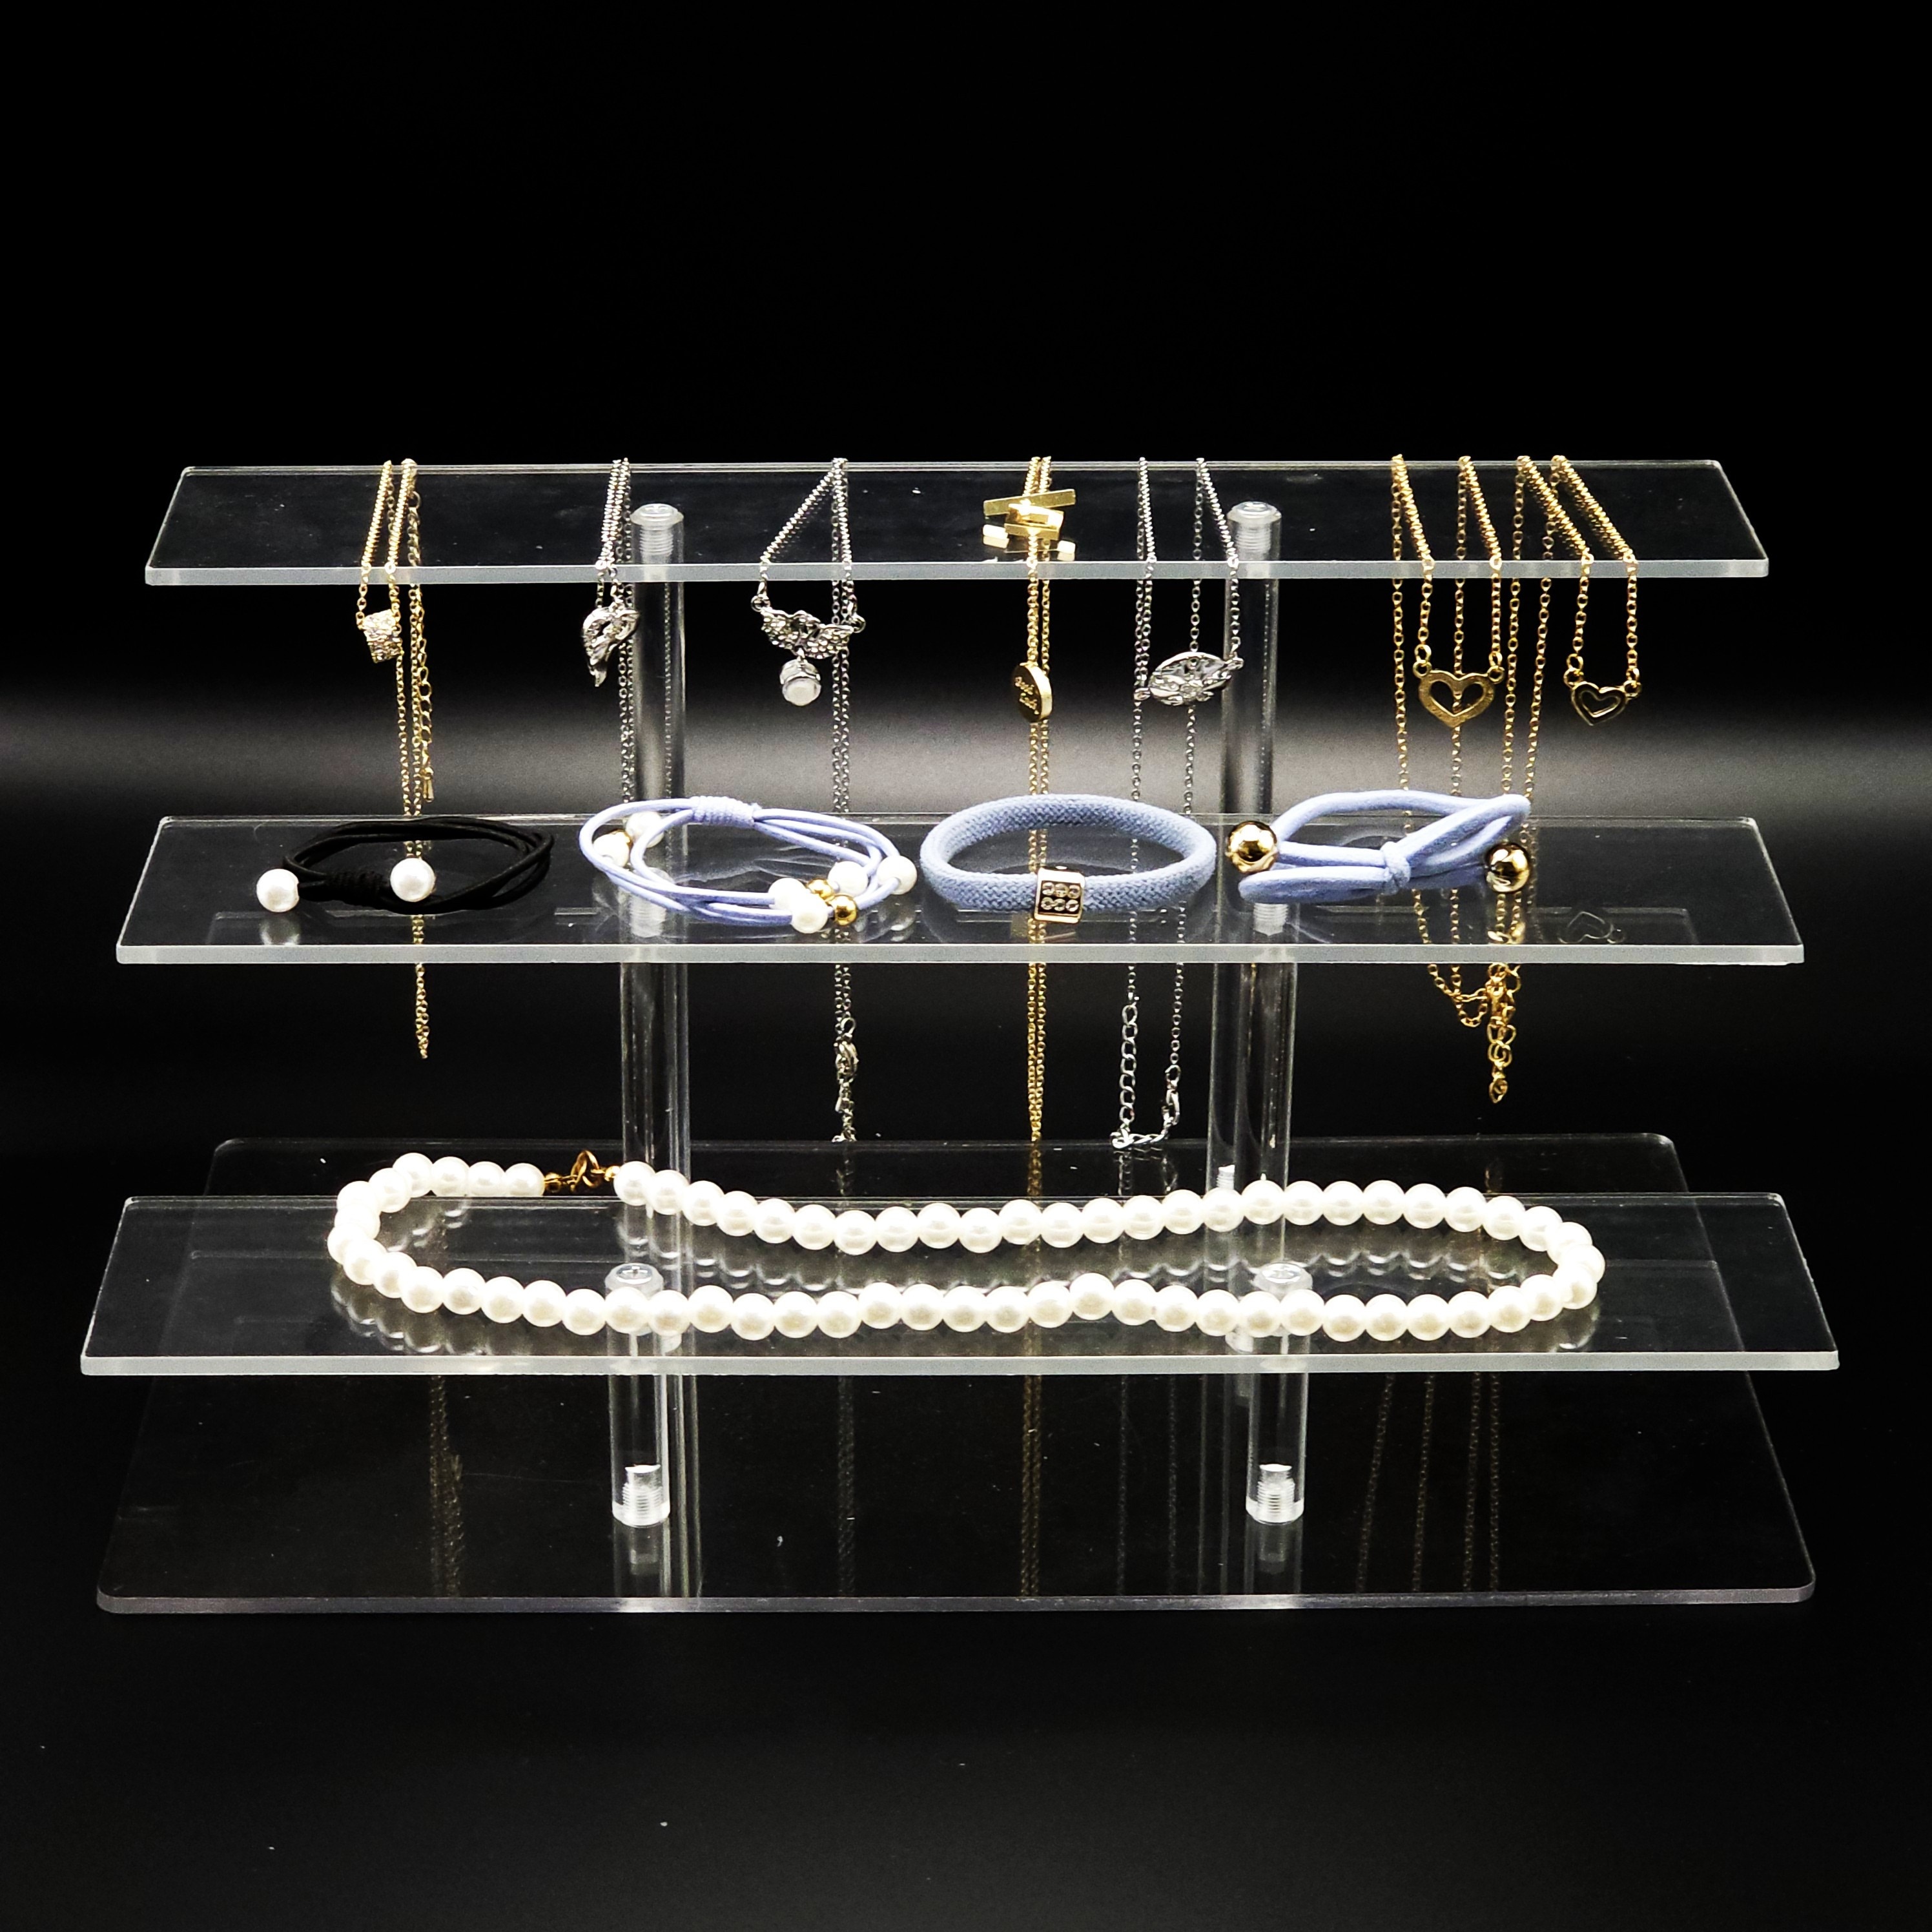 Acrylic Jewelry / Accessories Display